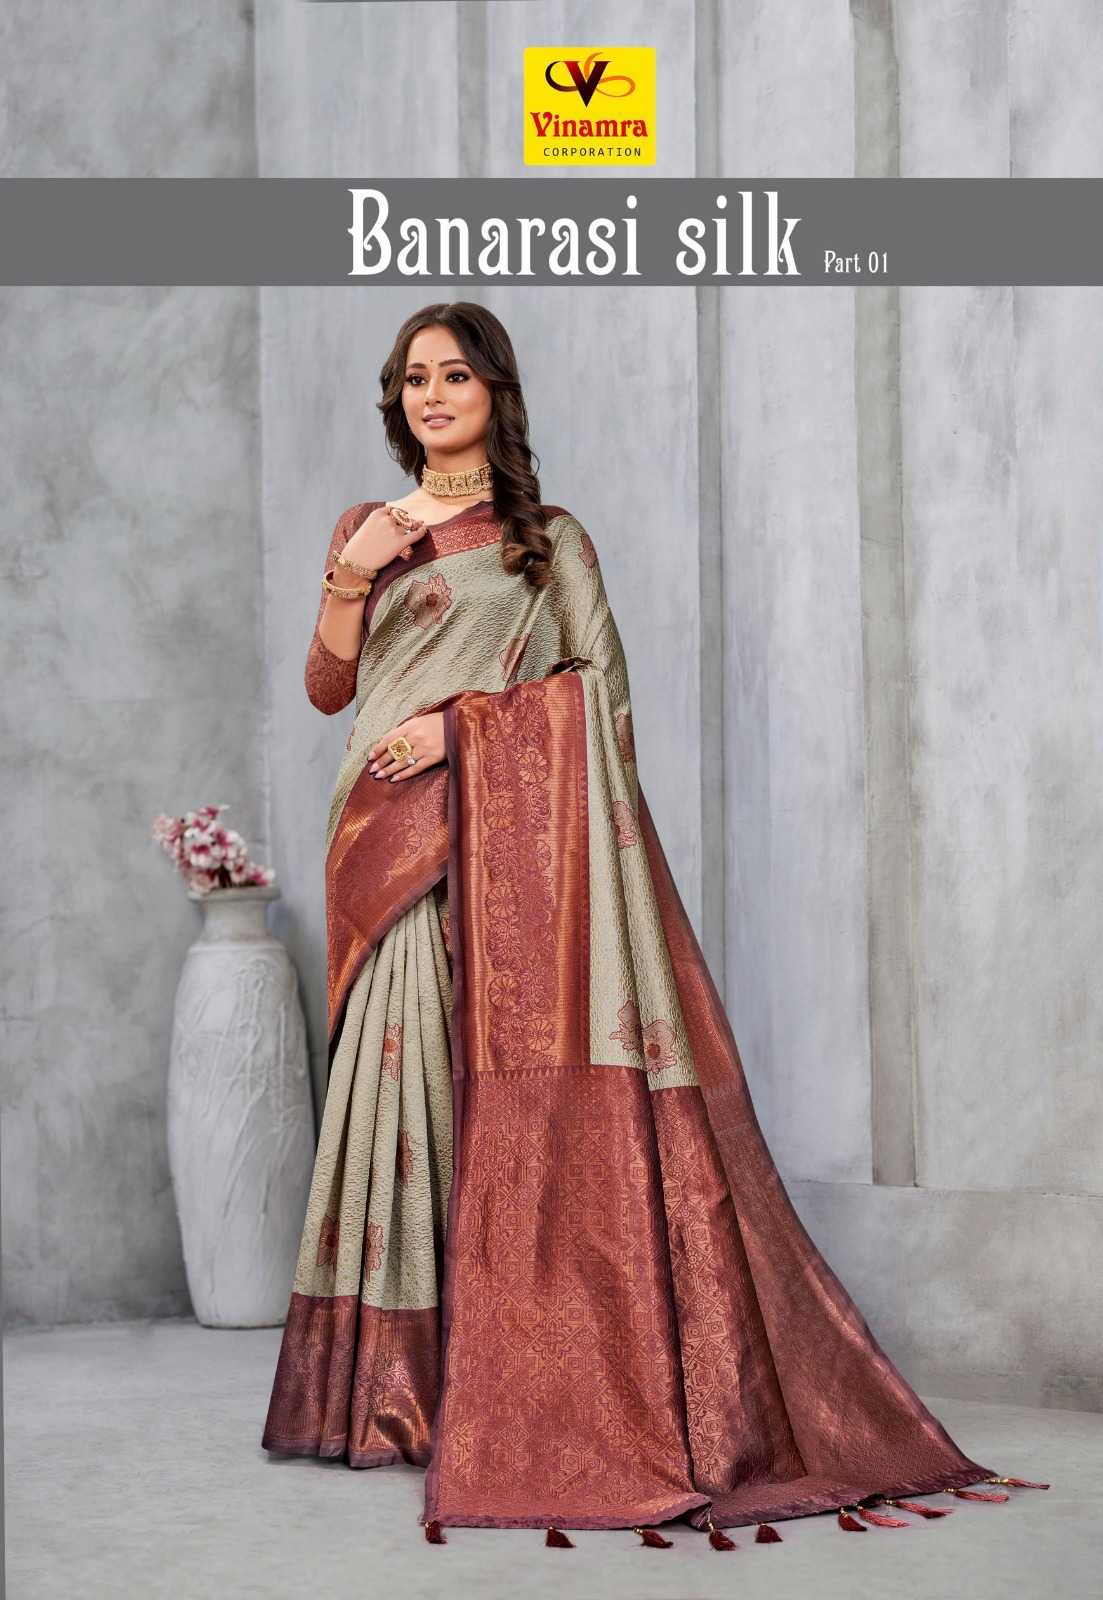 vinamra banarasi silk vol 1 beautiful occasion wear saree supplier